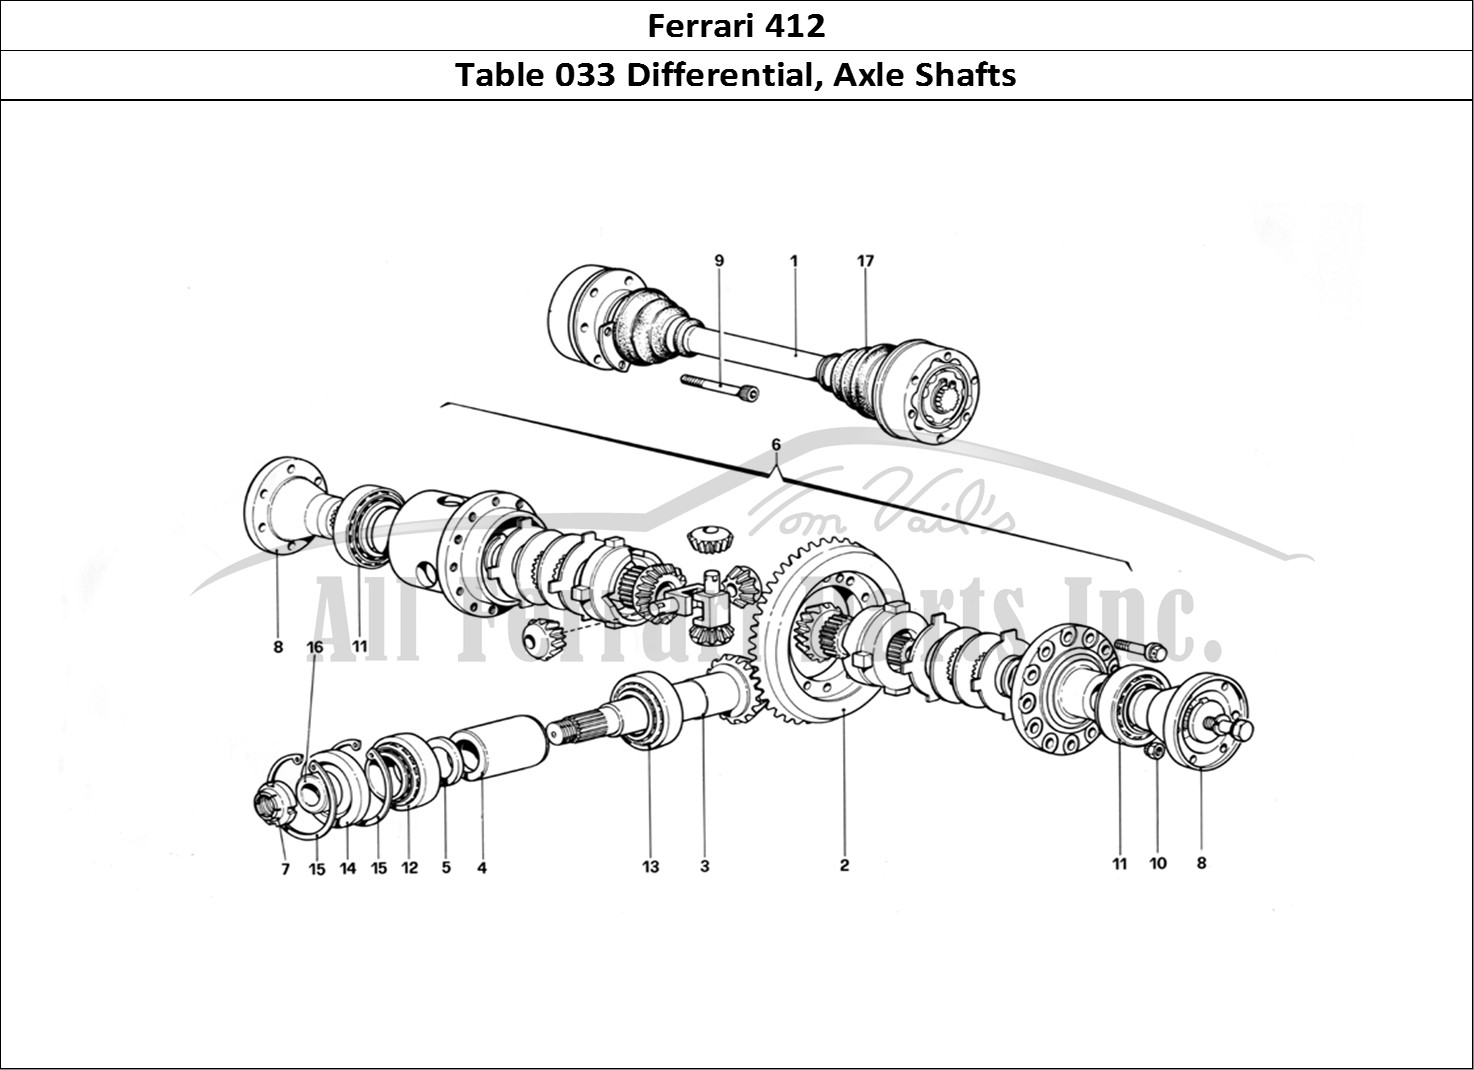 Ferrari Parts Ferrari 412 (Mechanical) Page 033 Differential & Axle Shaft